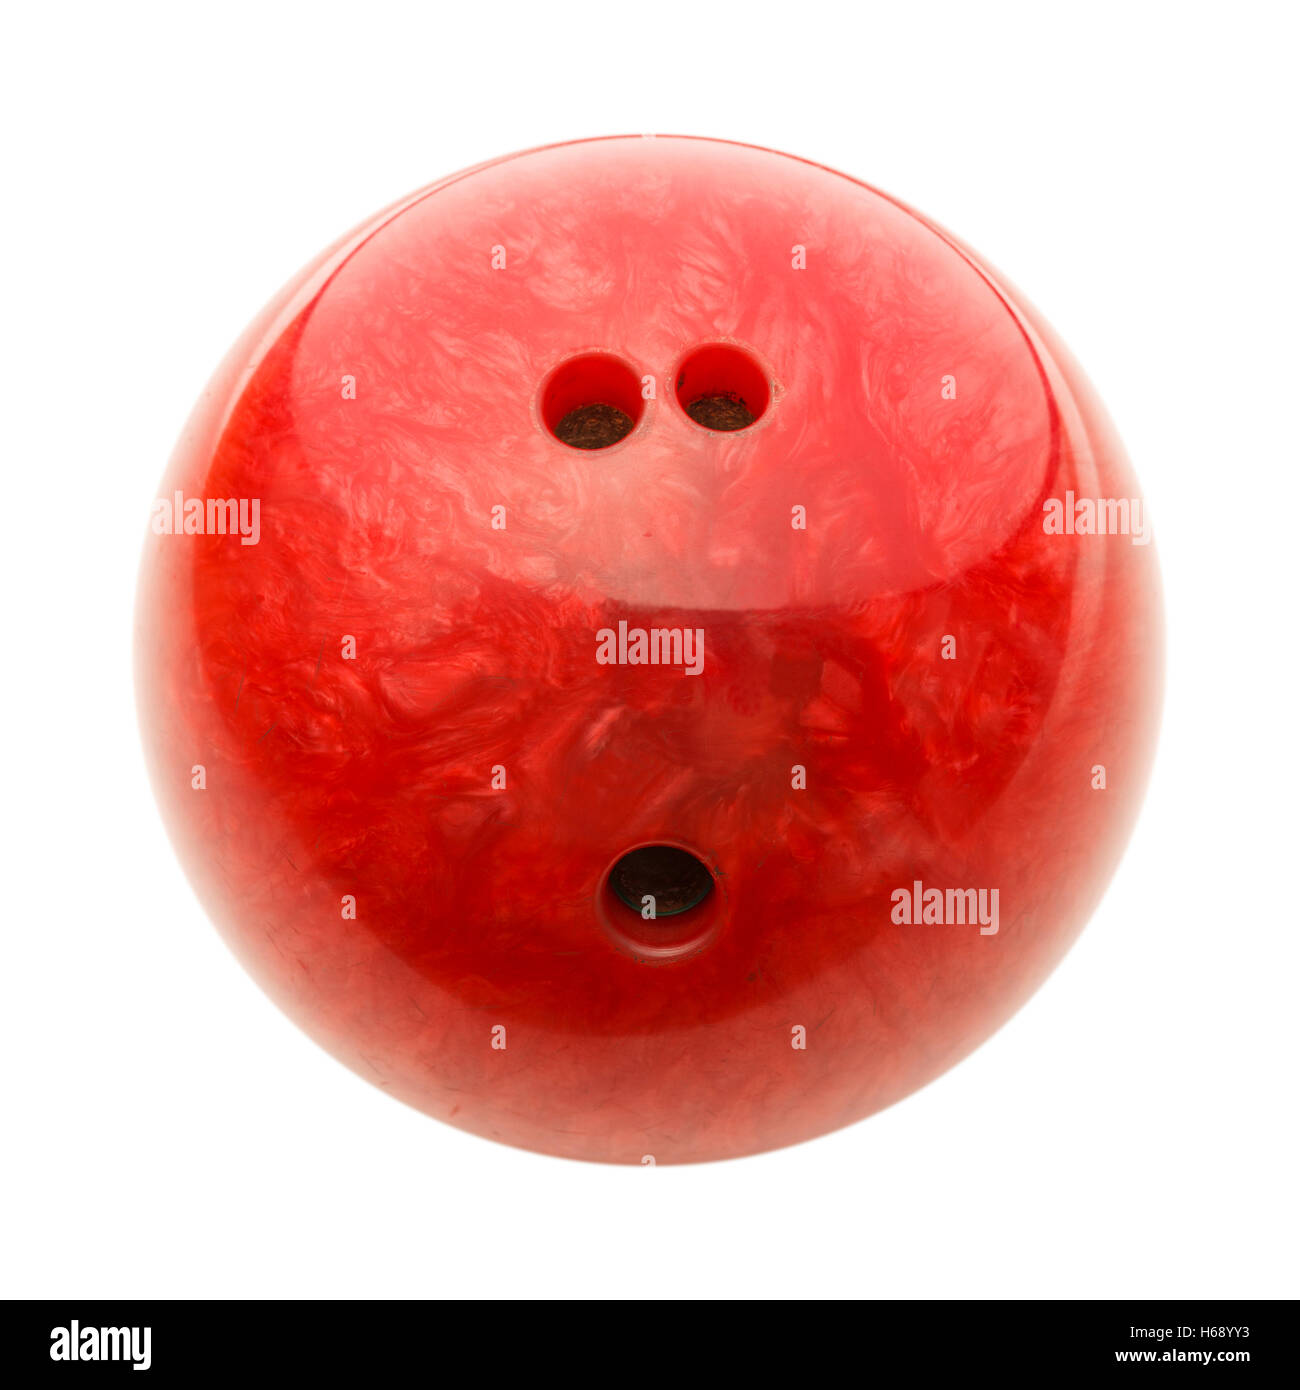 Roten Bowling-Kugel mit Löchern, Isolated on White Background  Stockfotografie - Alamy